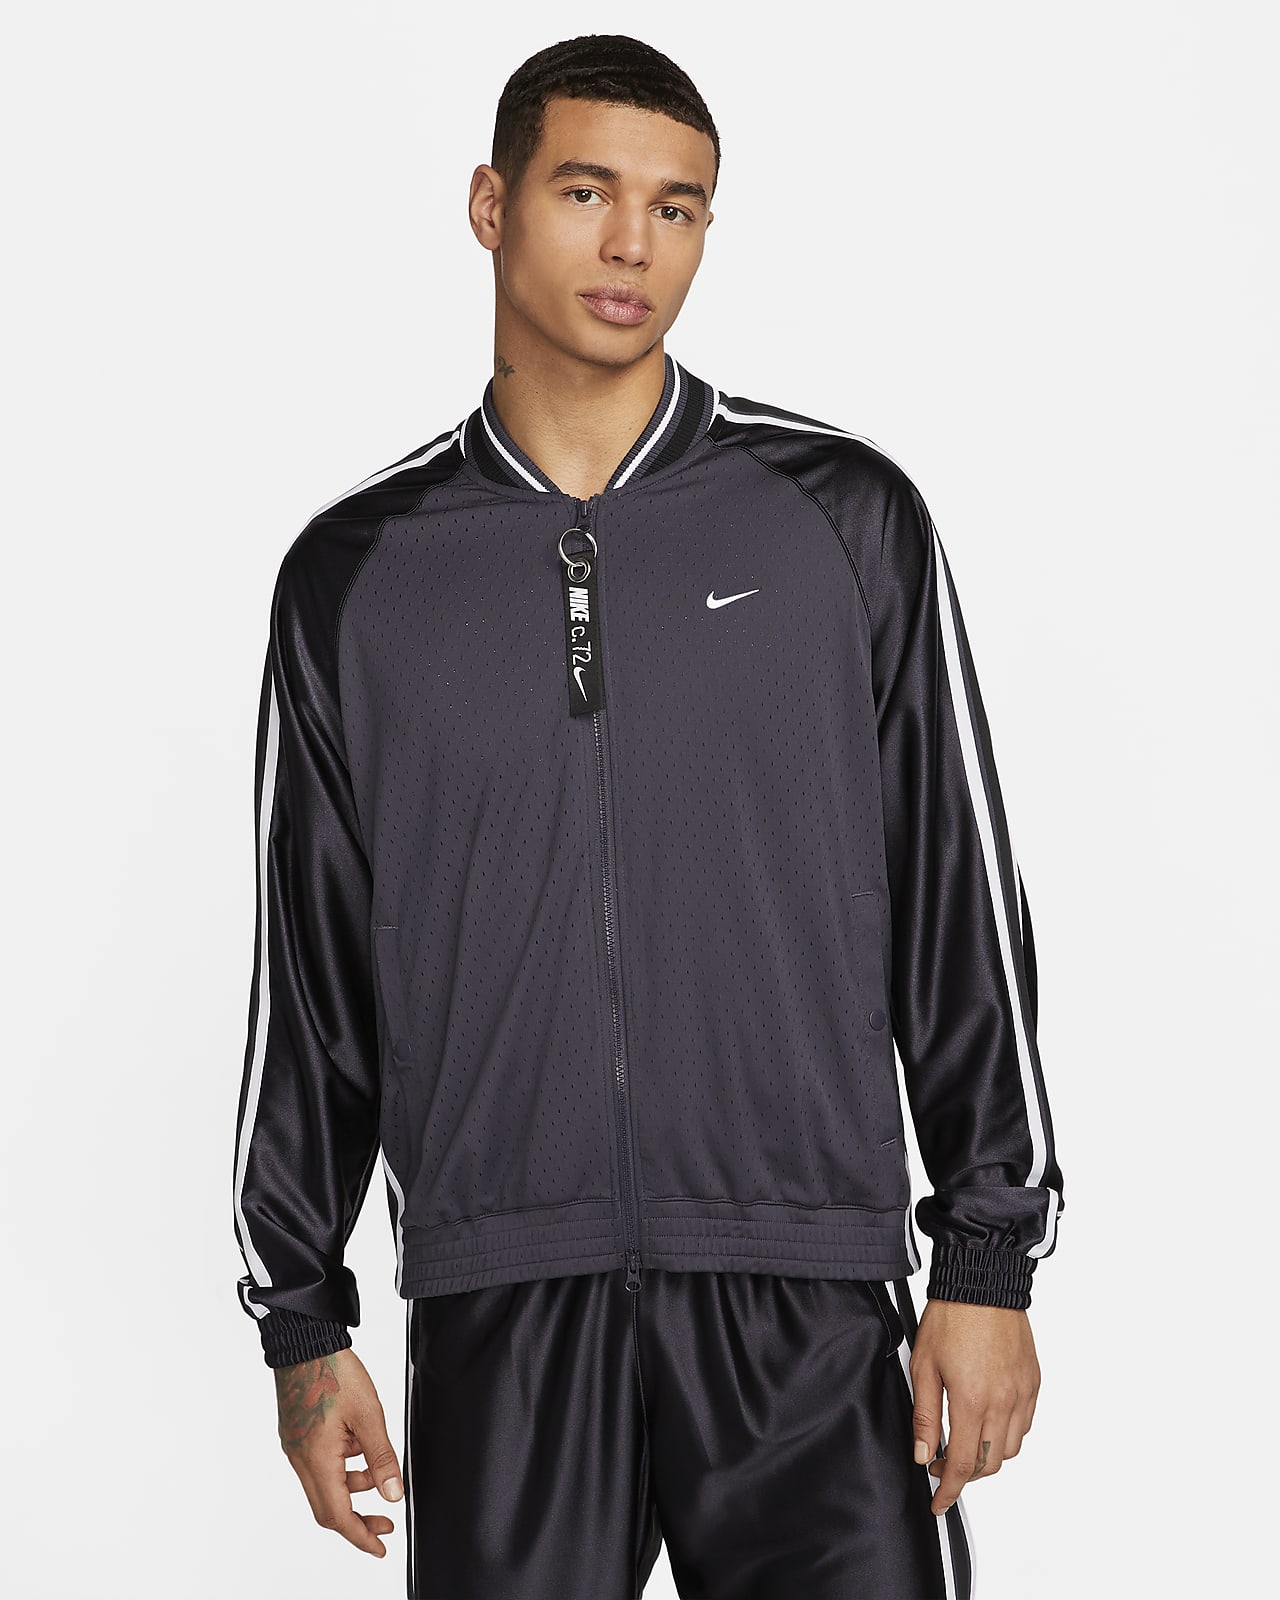 Ciego verbo Con Nike Men's Premium Basketball Jacket. Nike LU